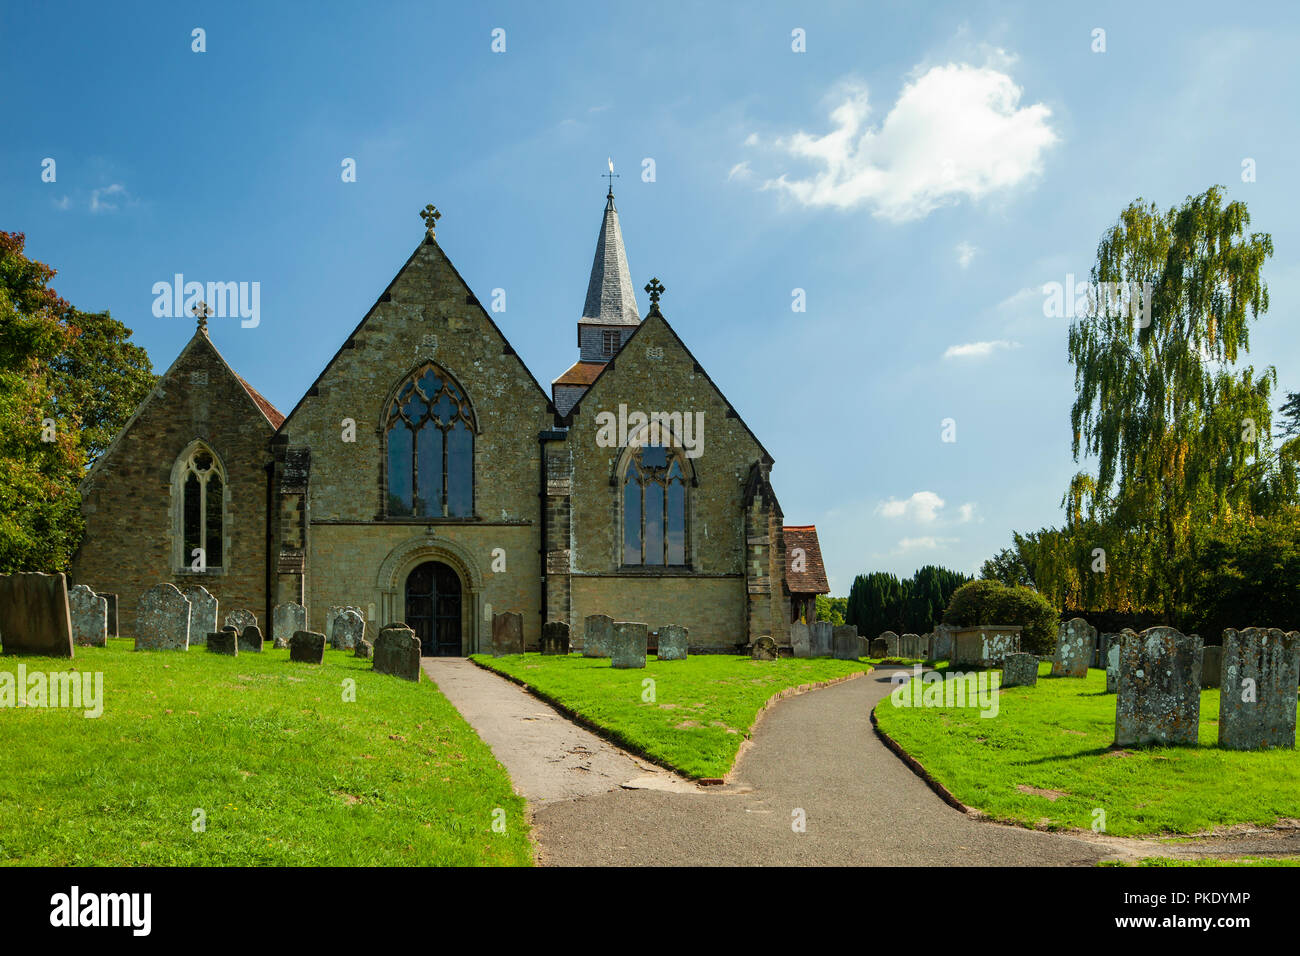 Summer at St Nicholas church in Godstone village, Surrey, England. Stock Photo